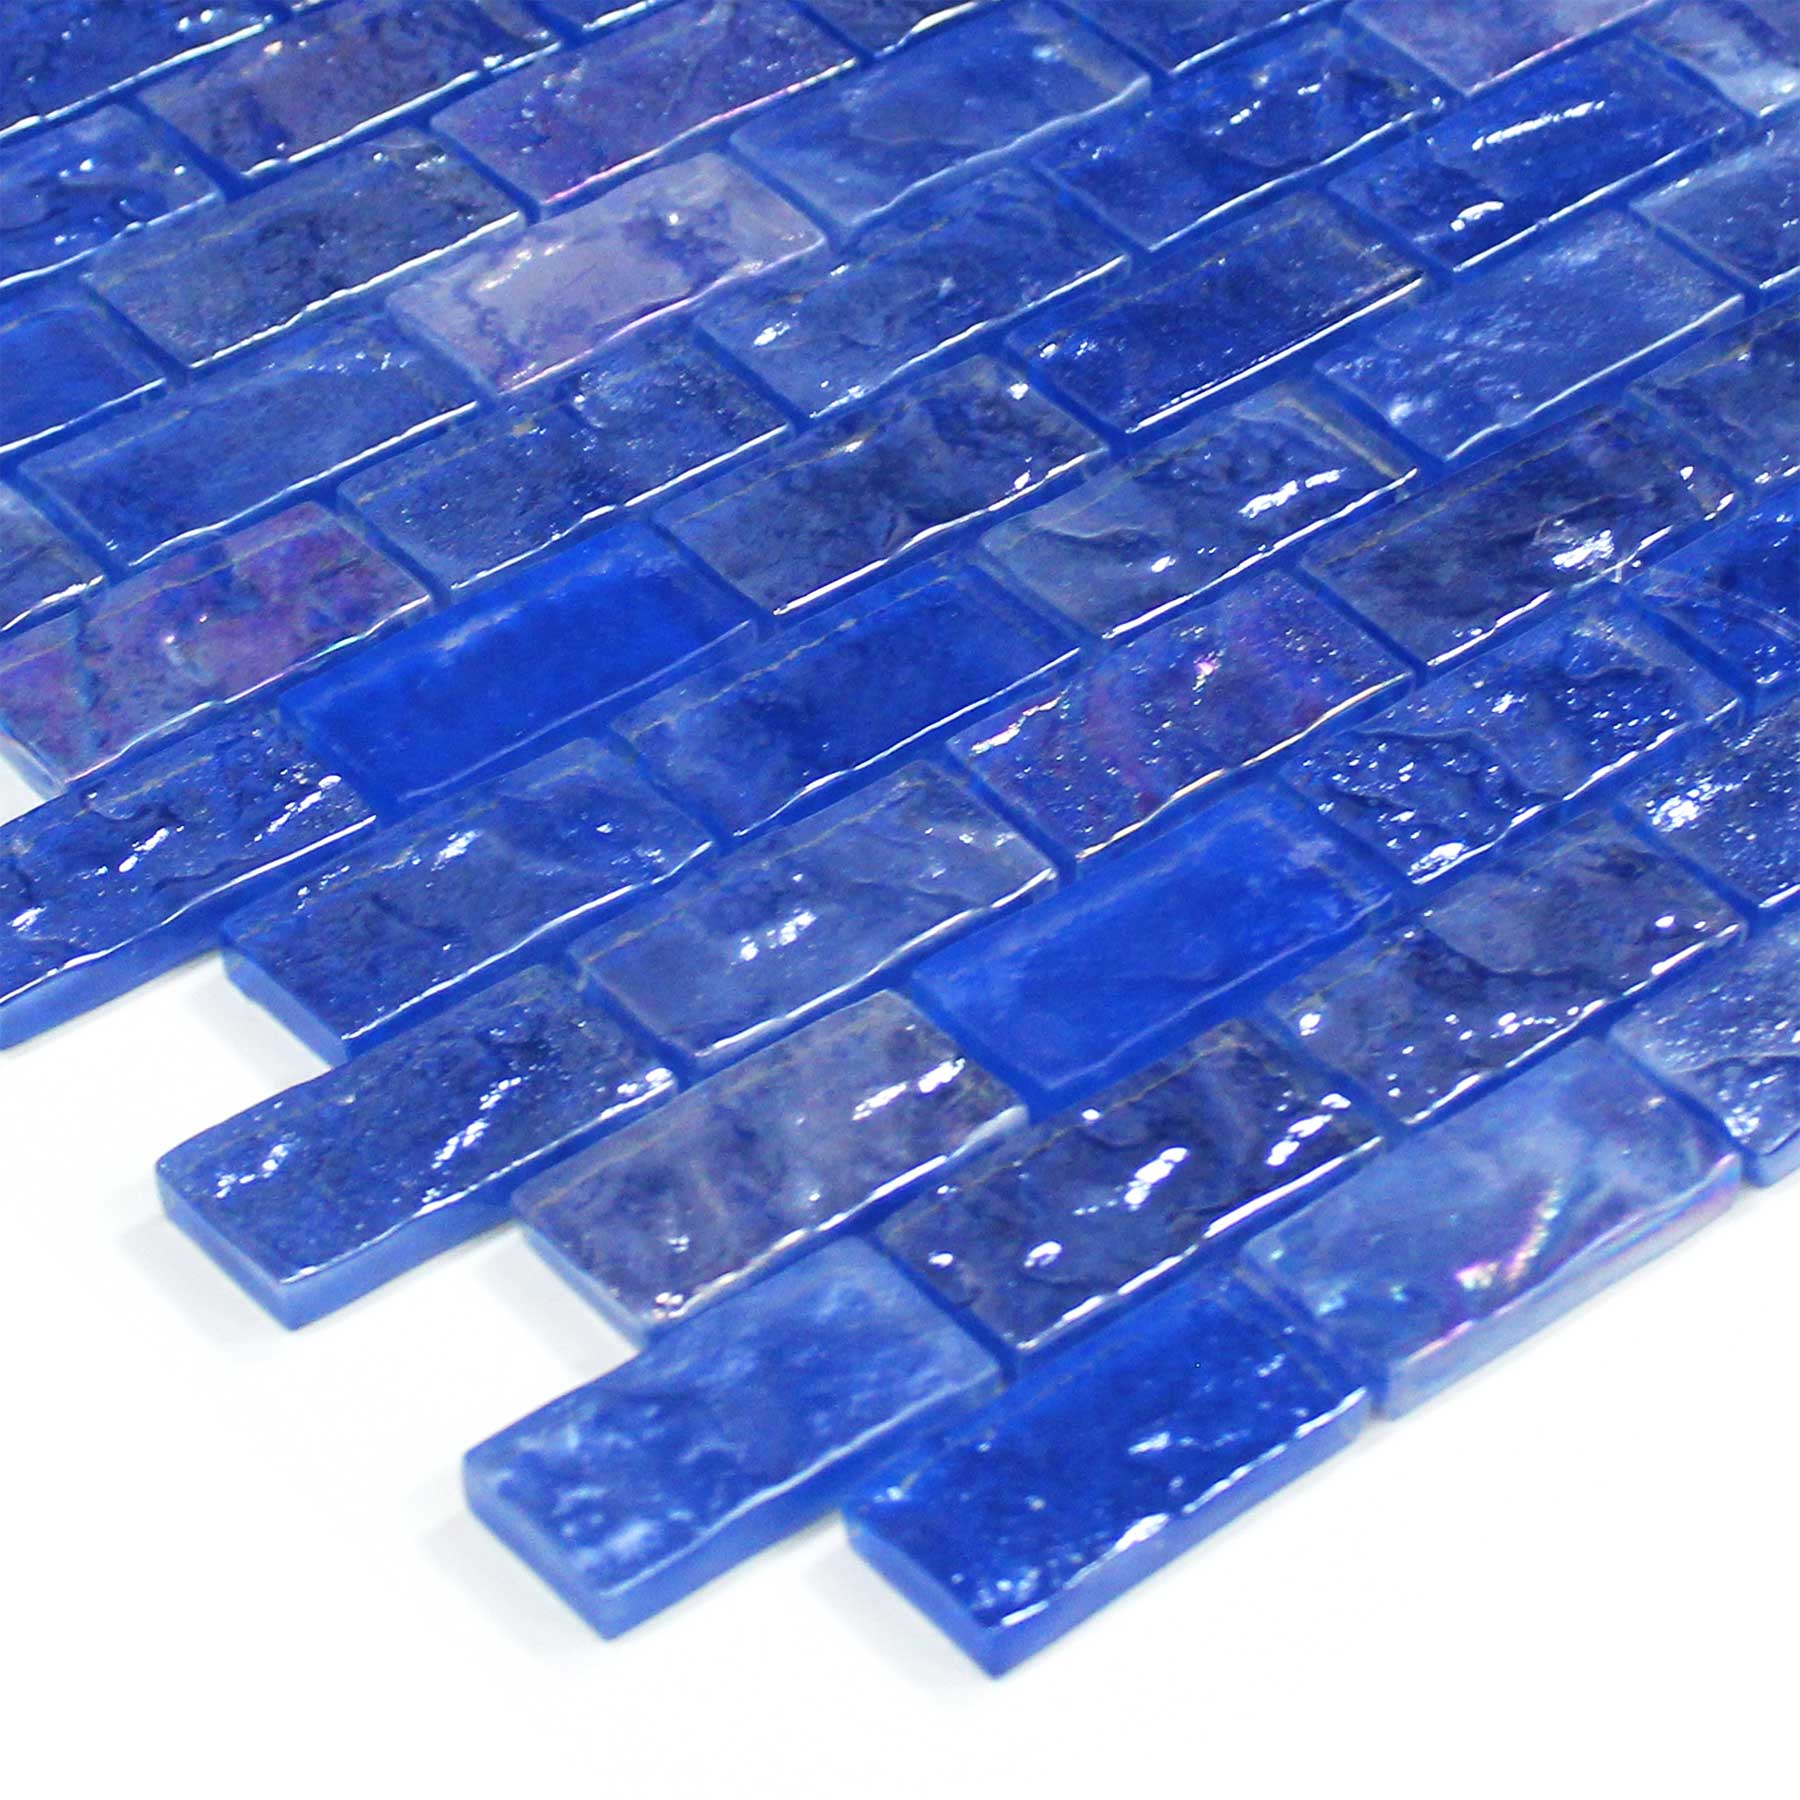 Litoelastic EVO - Tile Adhesive